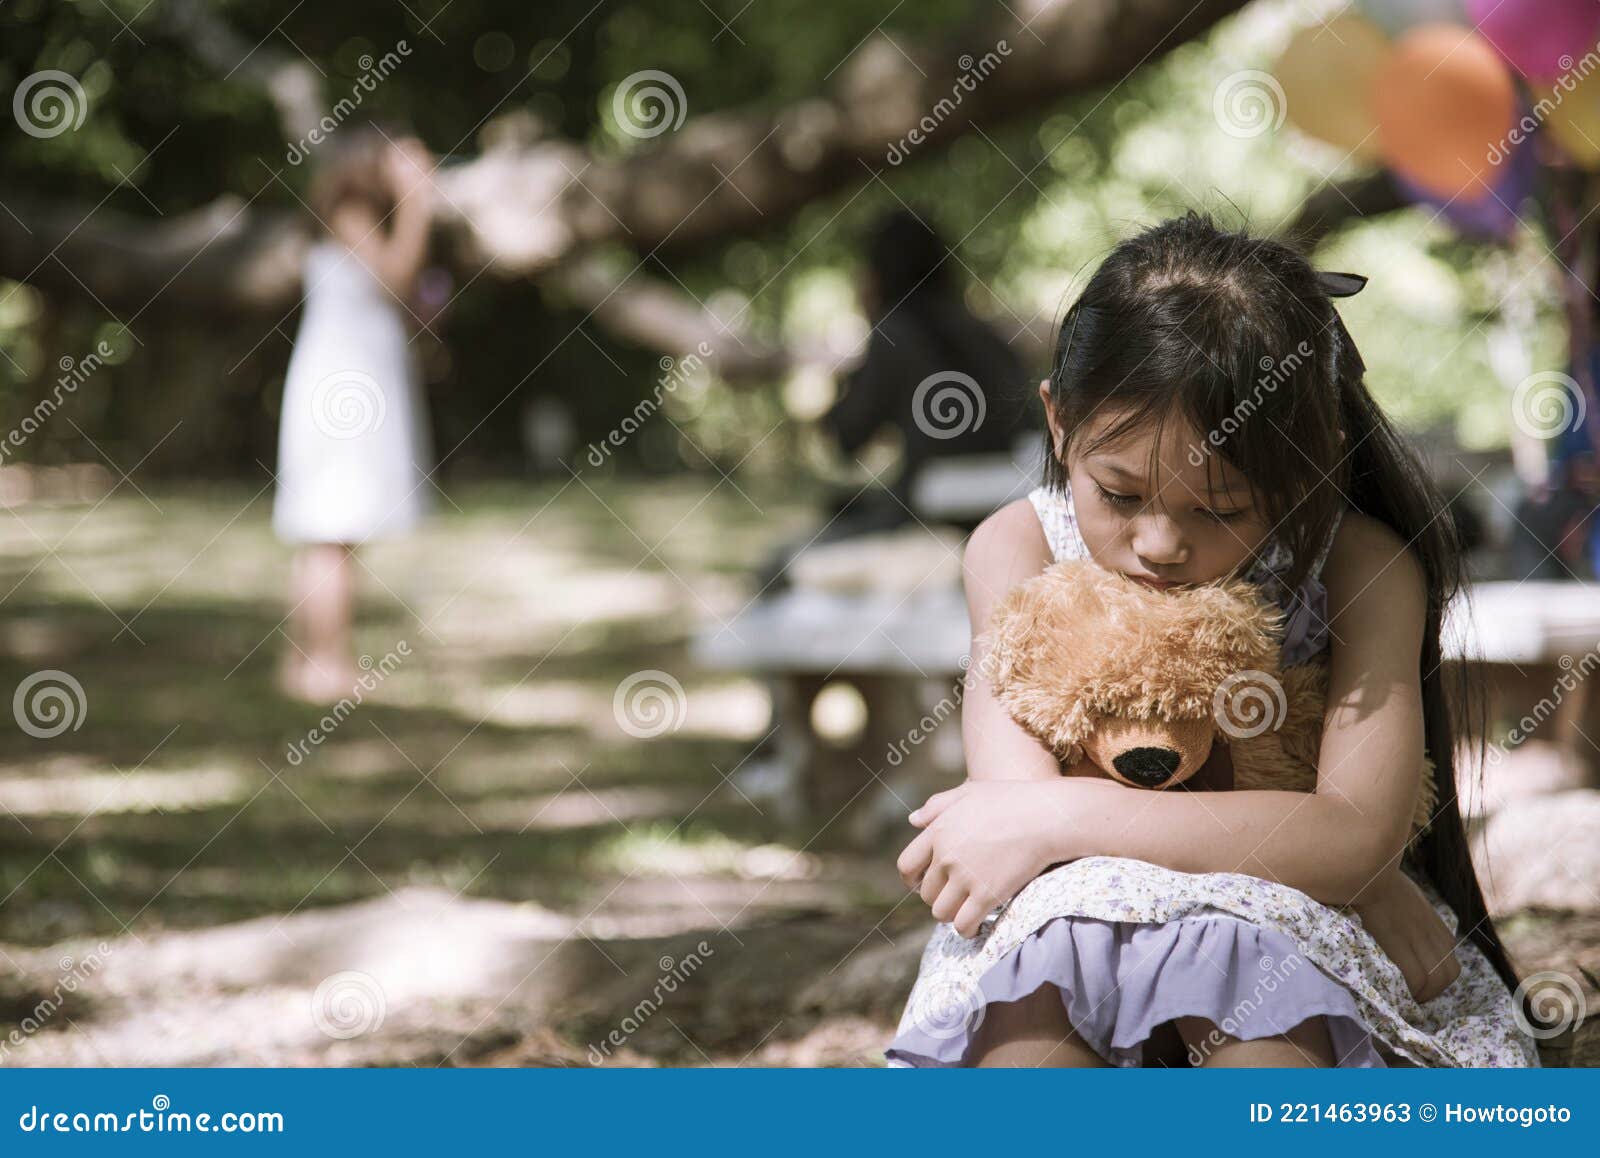 Sad Girl Hugging Teddy Bear Sadness Alone in Green Garden Park ...